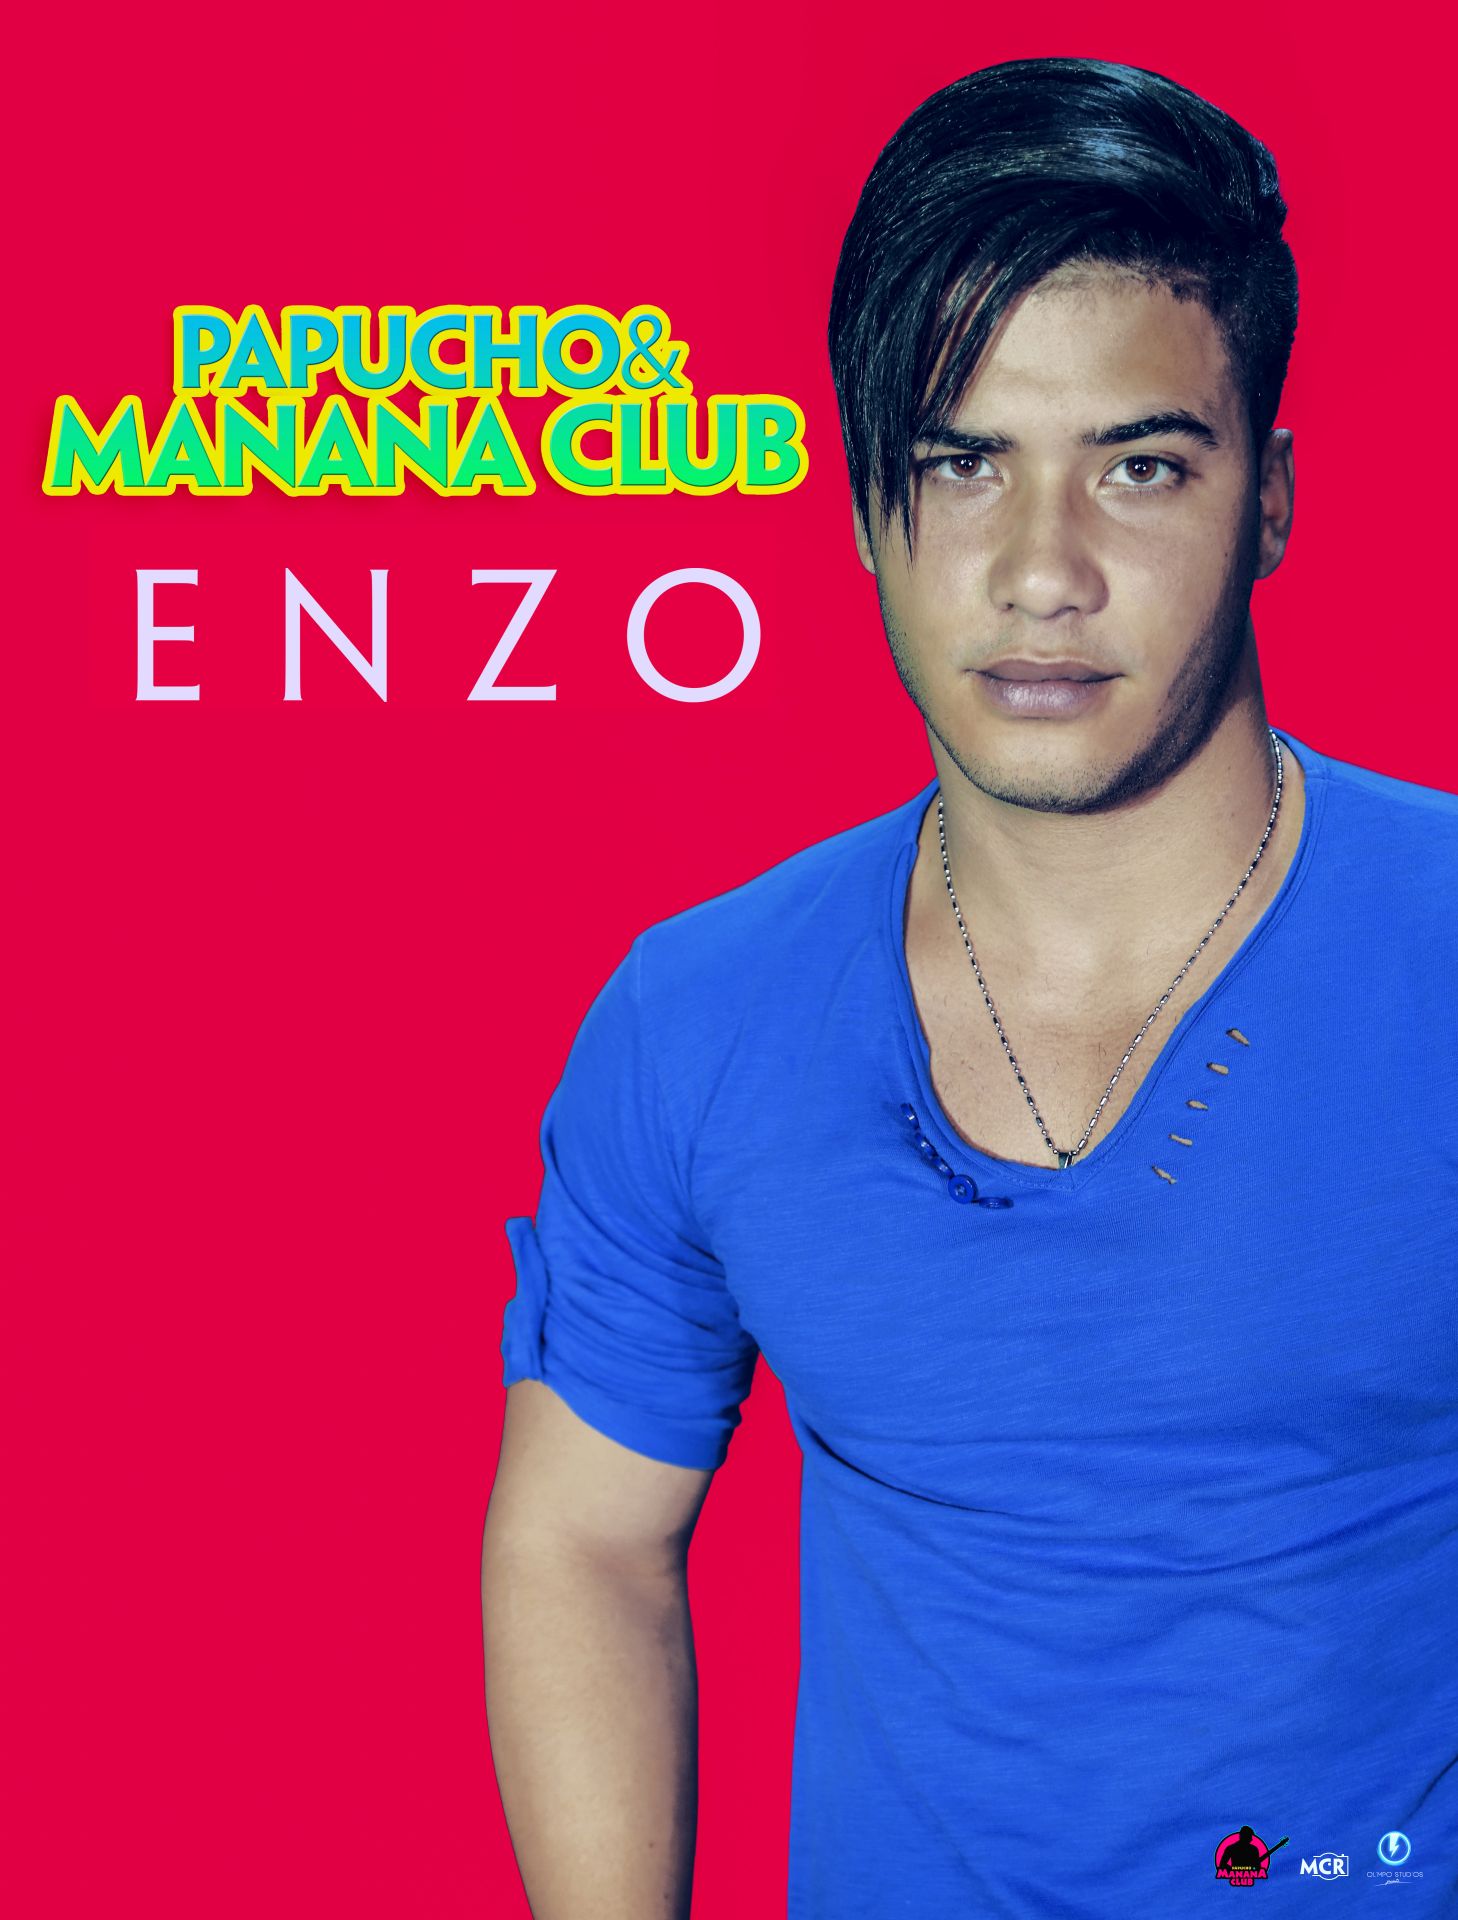 Manana Club Y Papucho_3.jpg